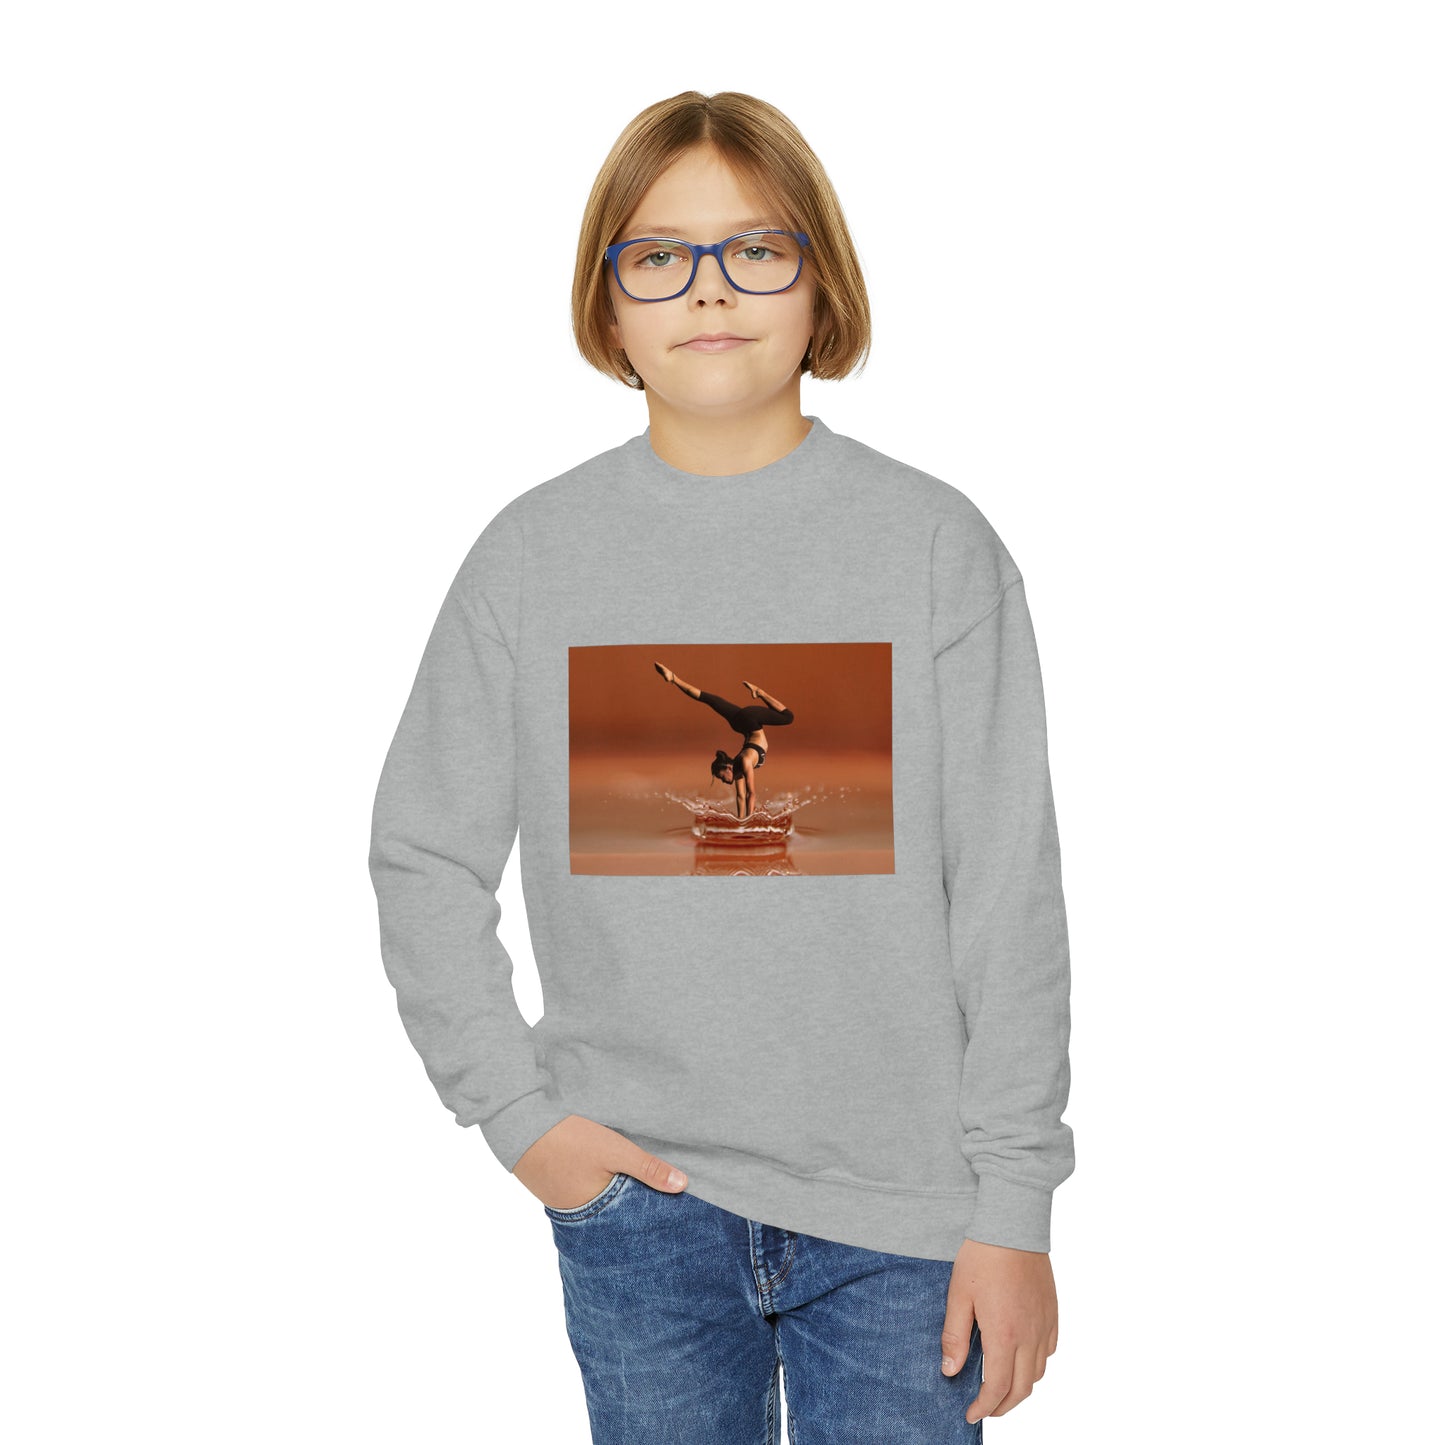 Youth Crewneck Sweatshirt with Dancer In Water Image